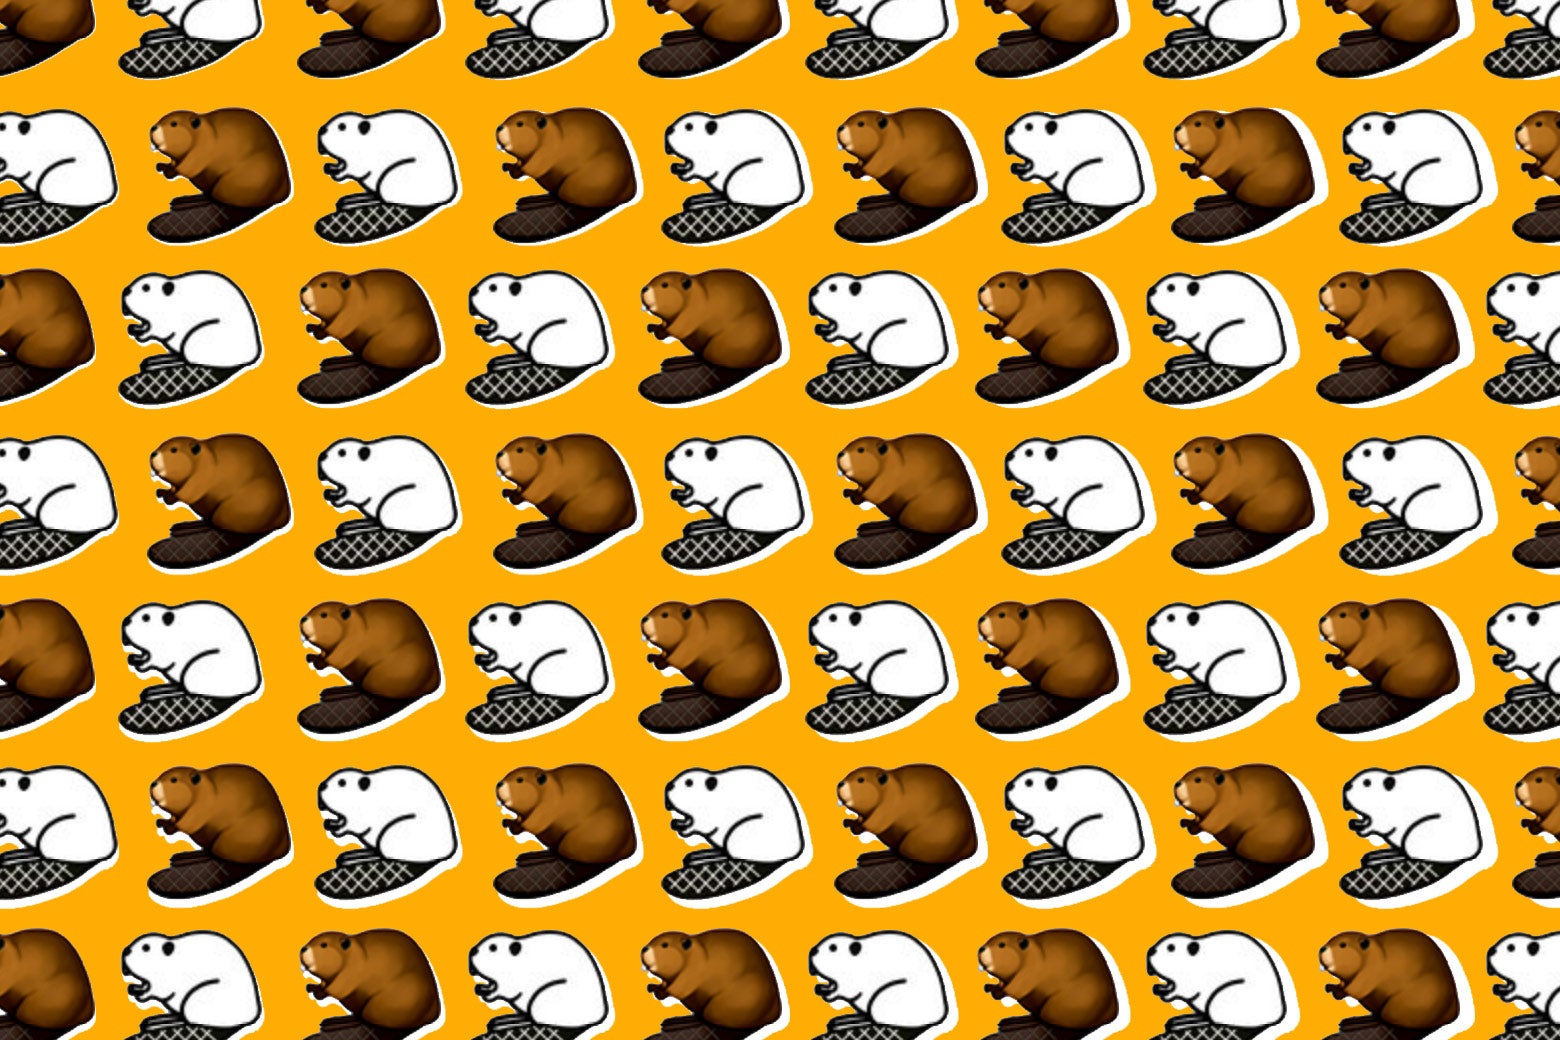 Beaver emojis! So cute.